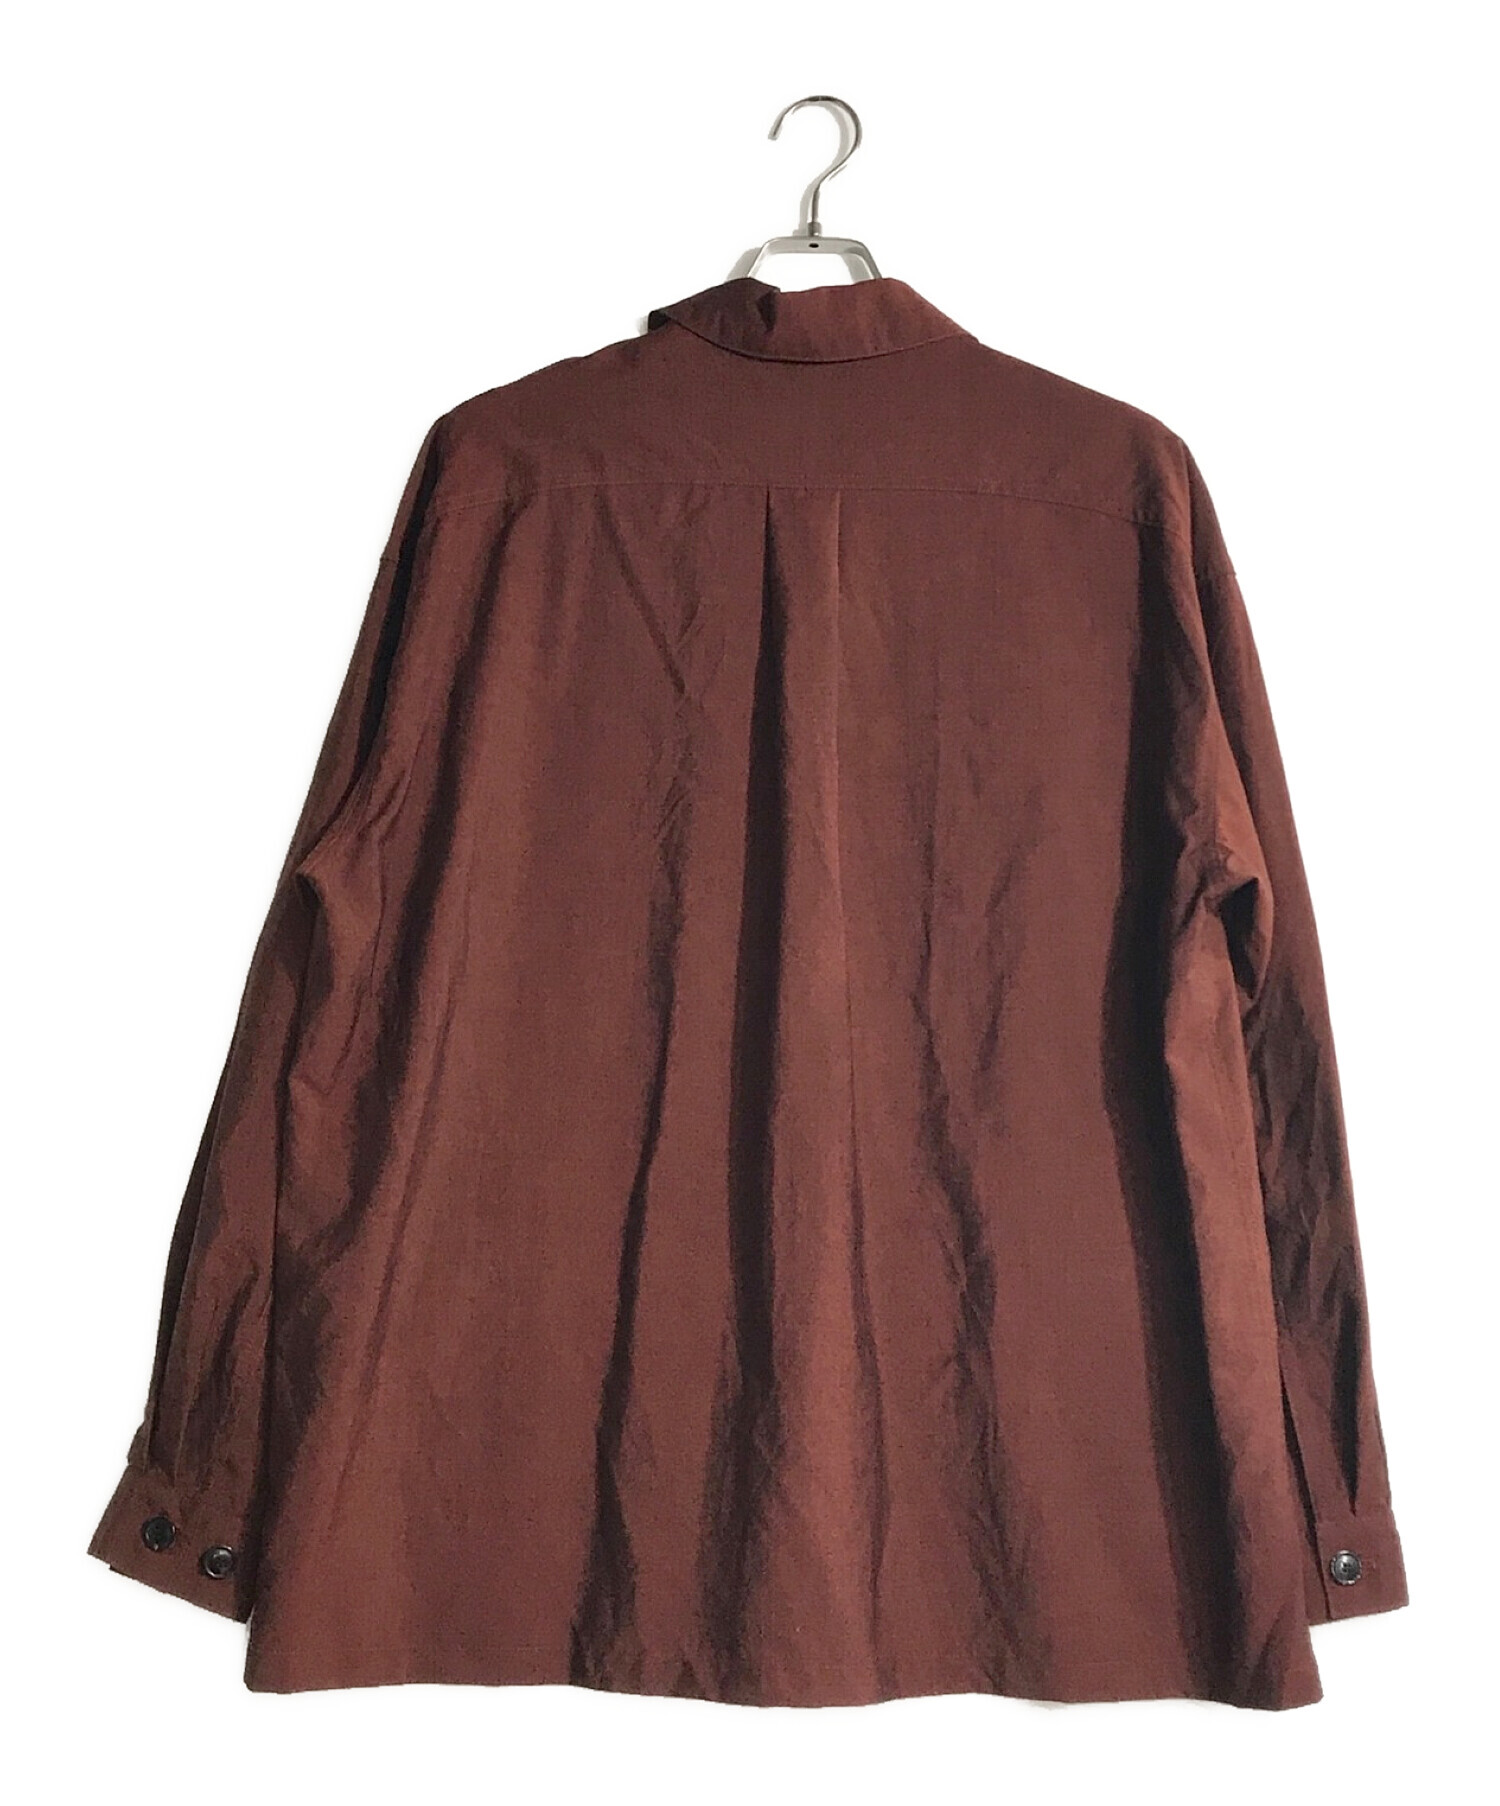 lownn (ローン) ウールモヘヤシャツジャケット ブラウン サイズ:48